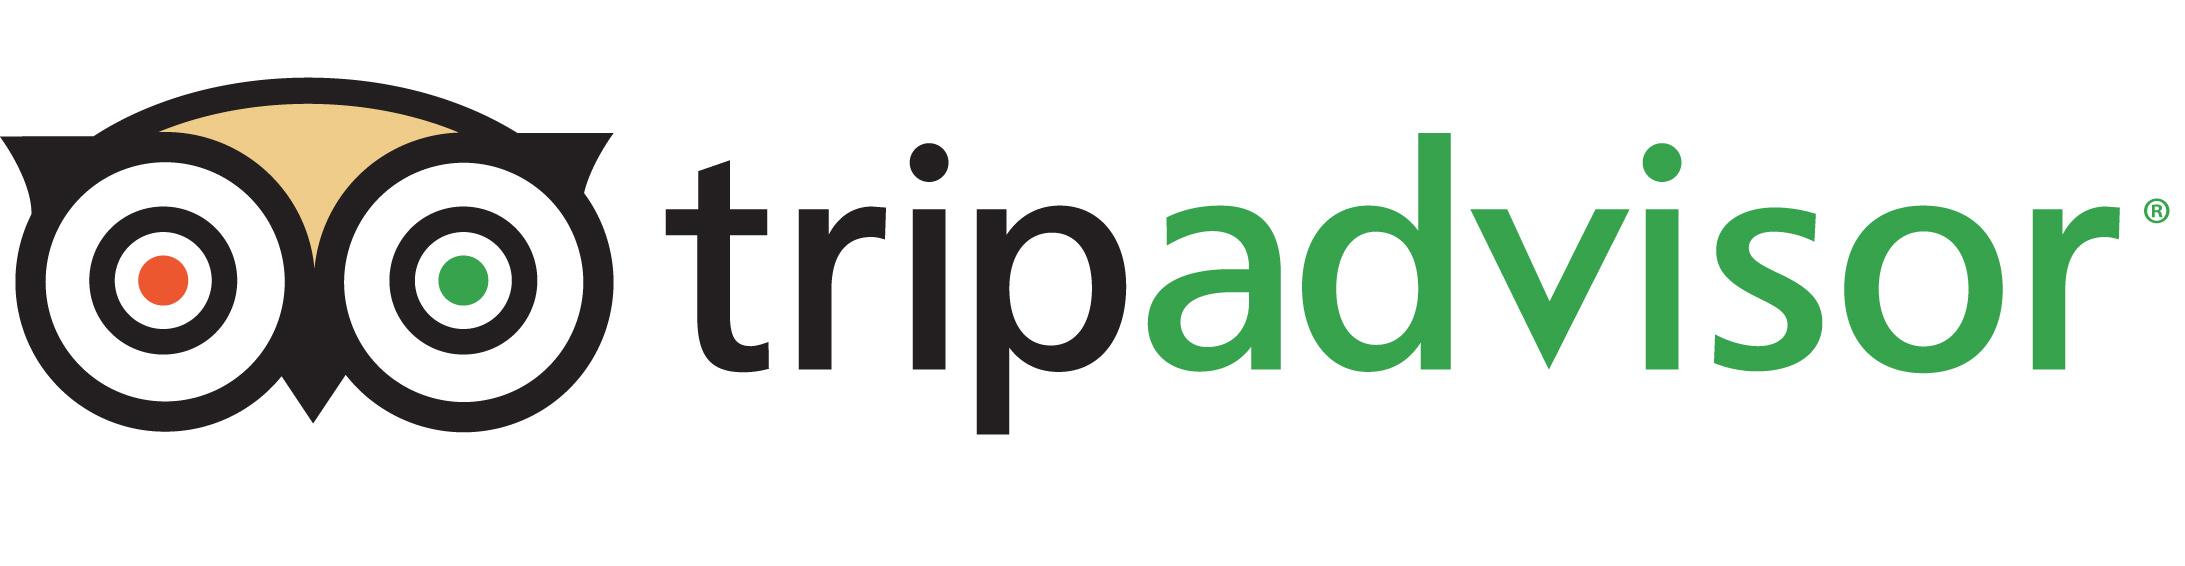 www TripAdvisor.com Logo - Links